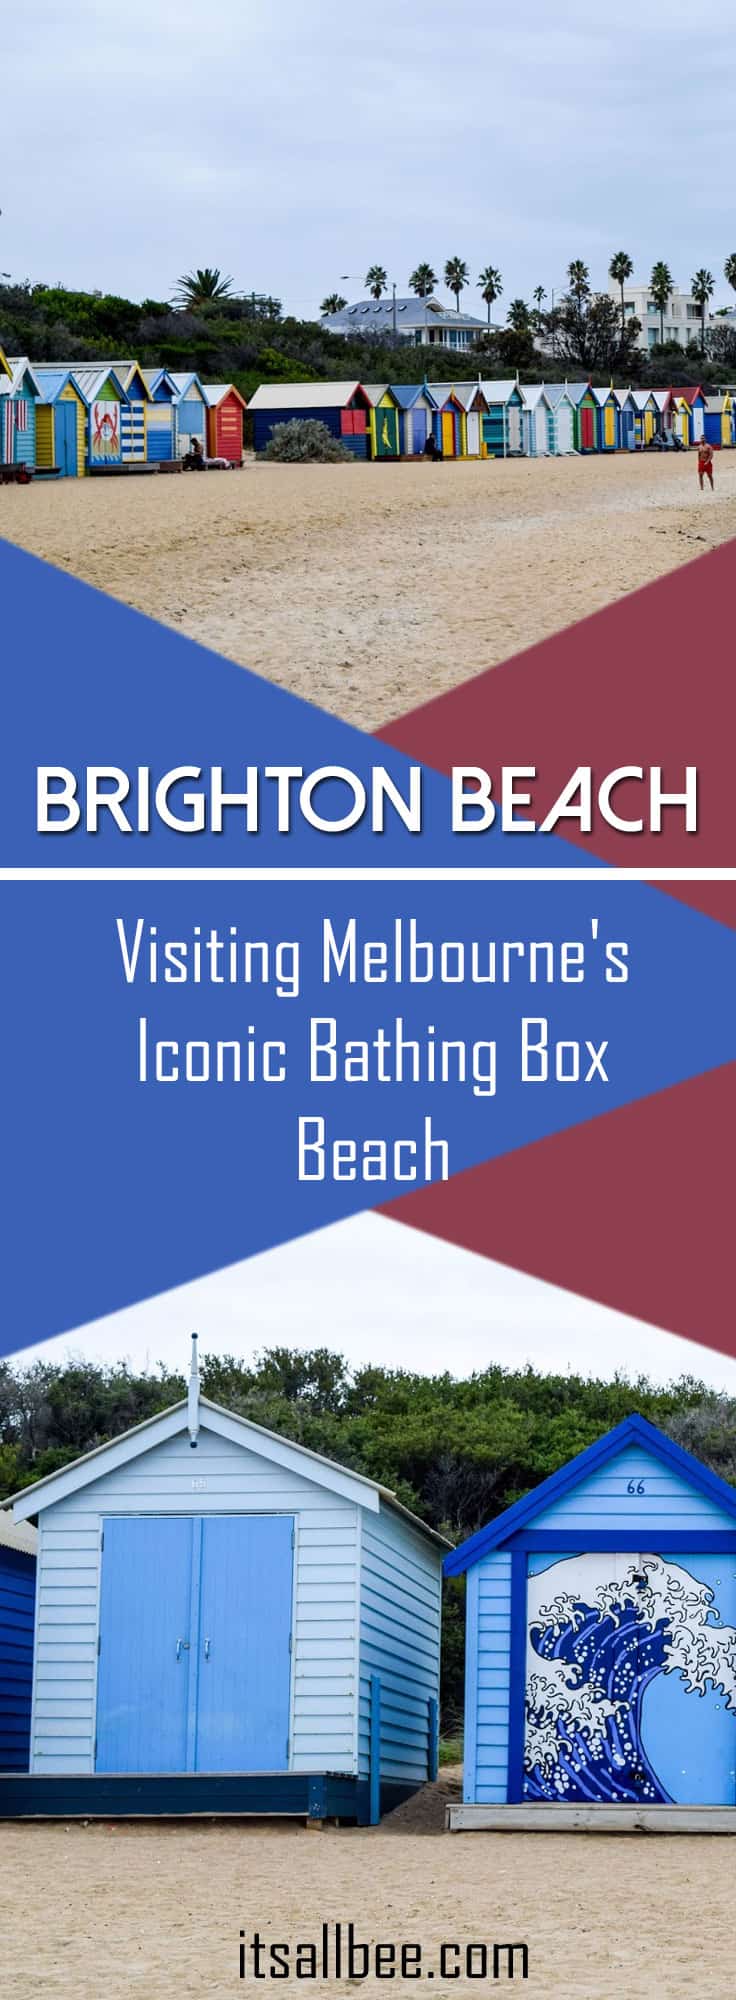 How To Get To Brighton Beach Melbourne's Bathing Boxes Beach By Train #itsallbee #australia #traveltips #beaches #ocean #vacation #takemethere #beachlife